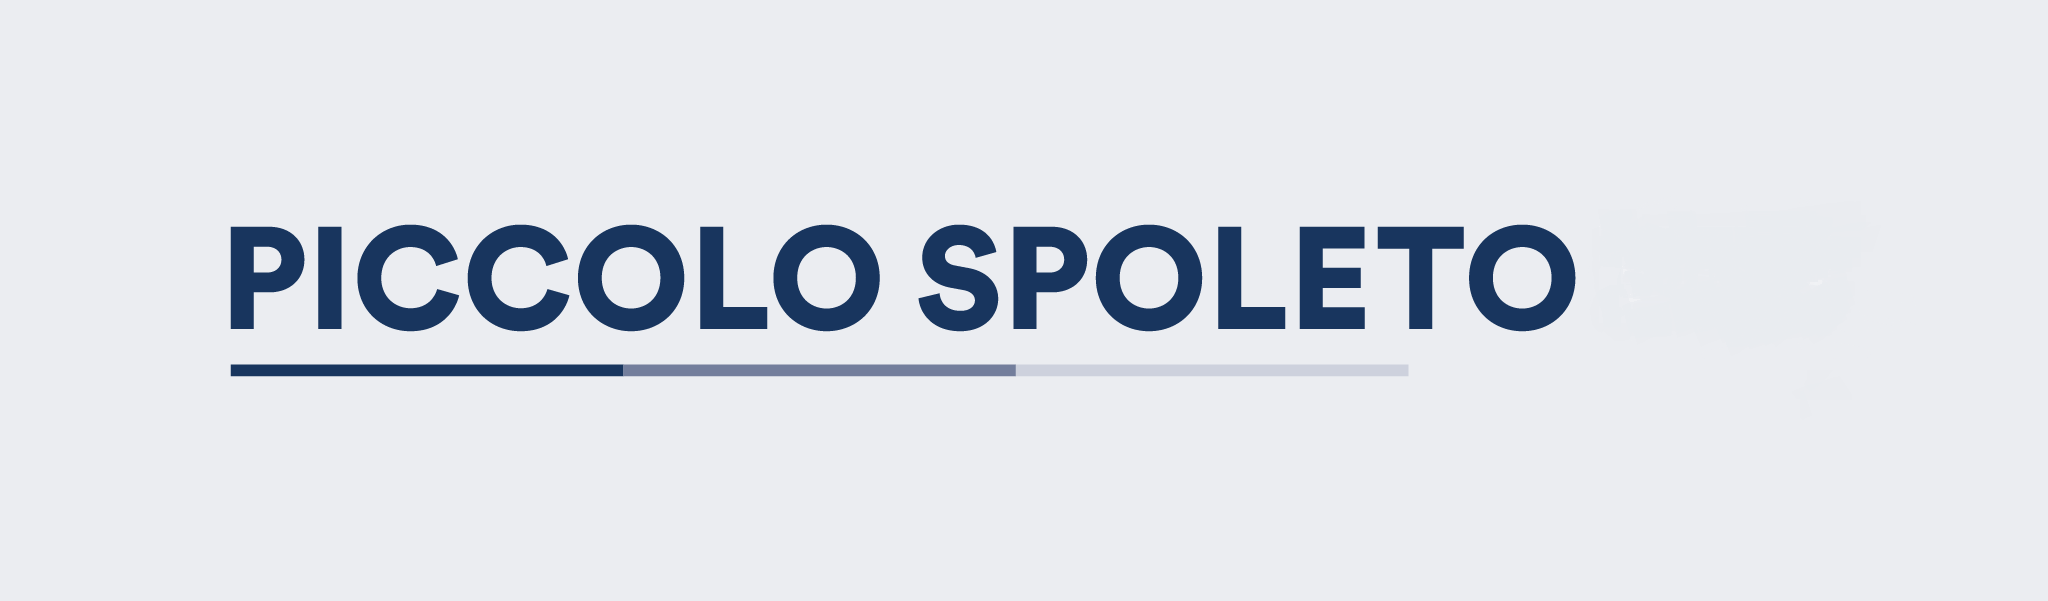 Piccolo Spoleto Festival Logo